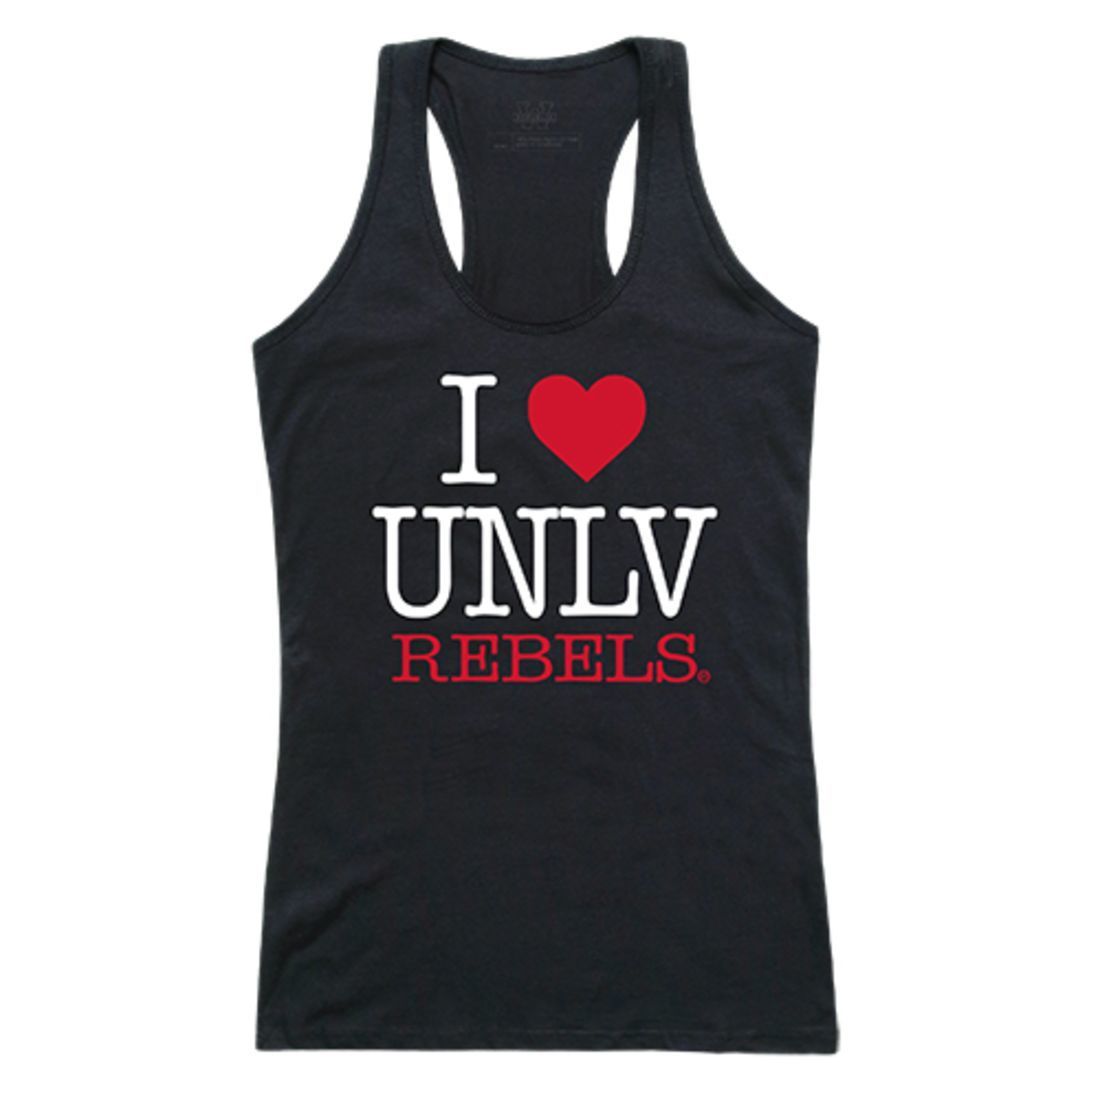 UNLV University of Nevada Las Vegas Rebels Womens Love Tank Top Tee T-Shirt Black-Campus-Wardrobe